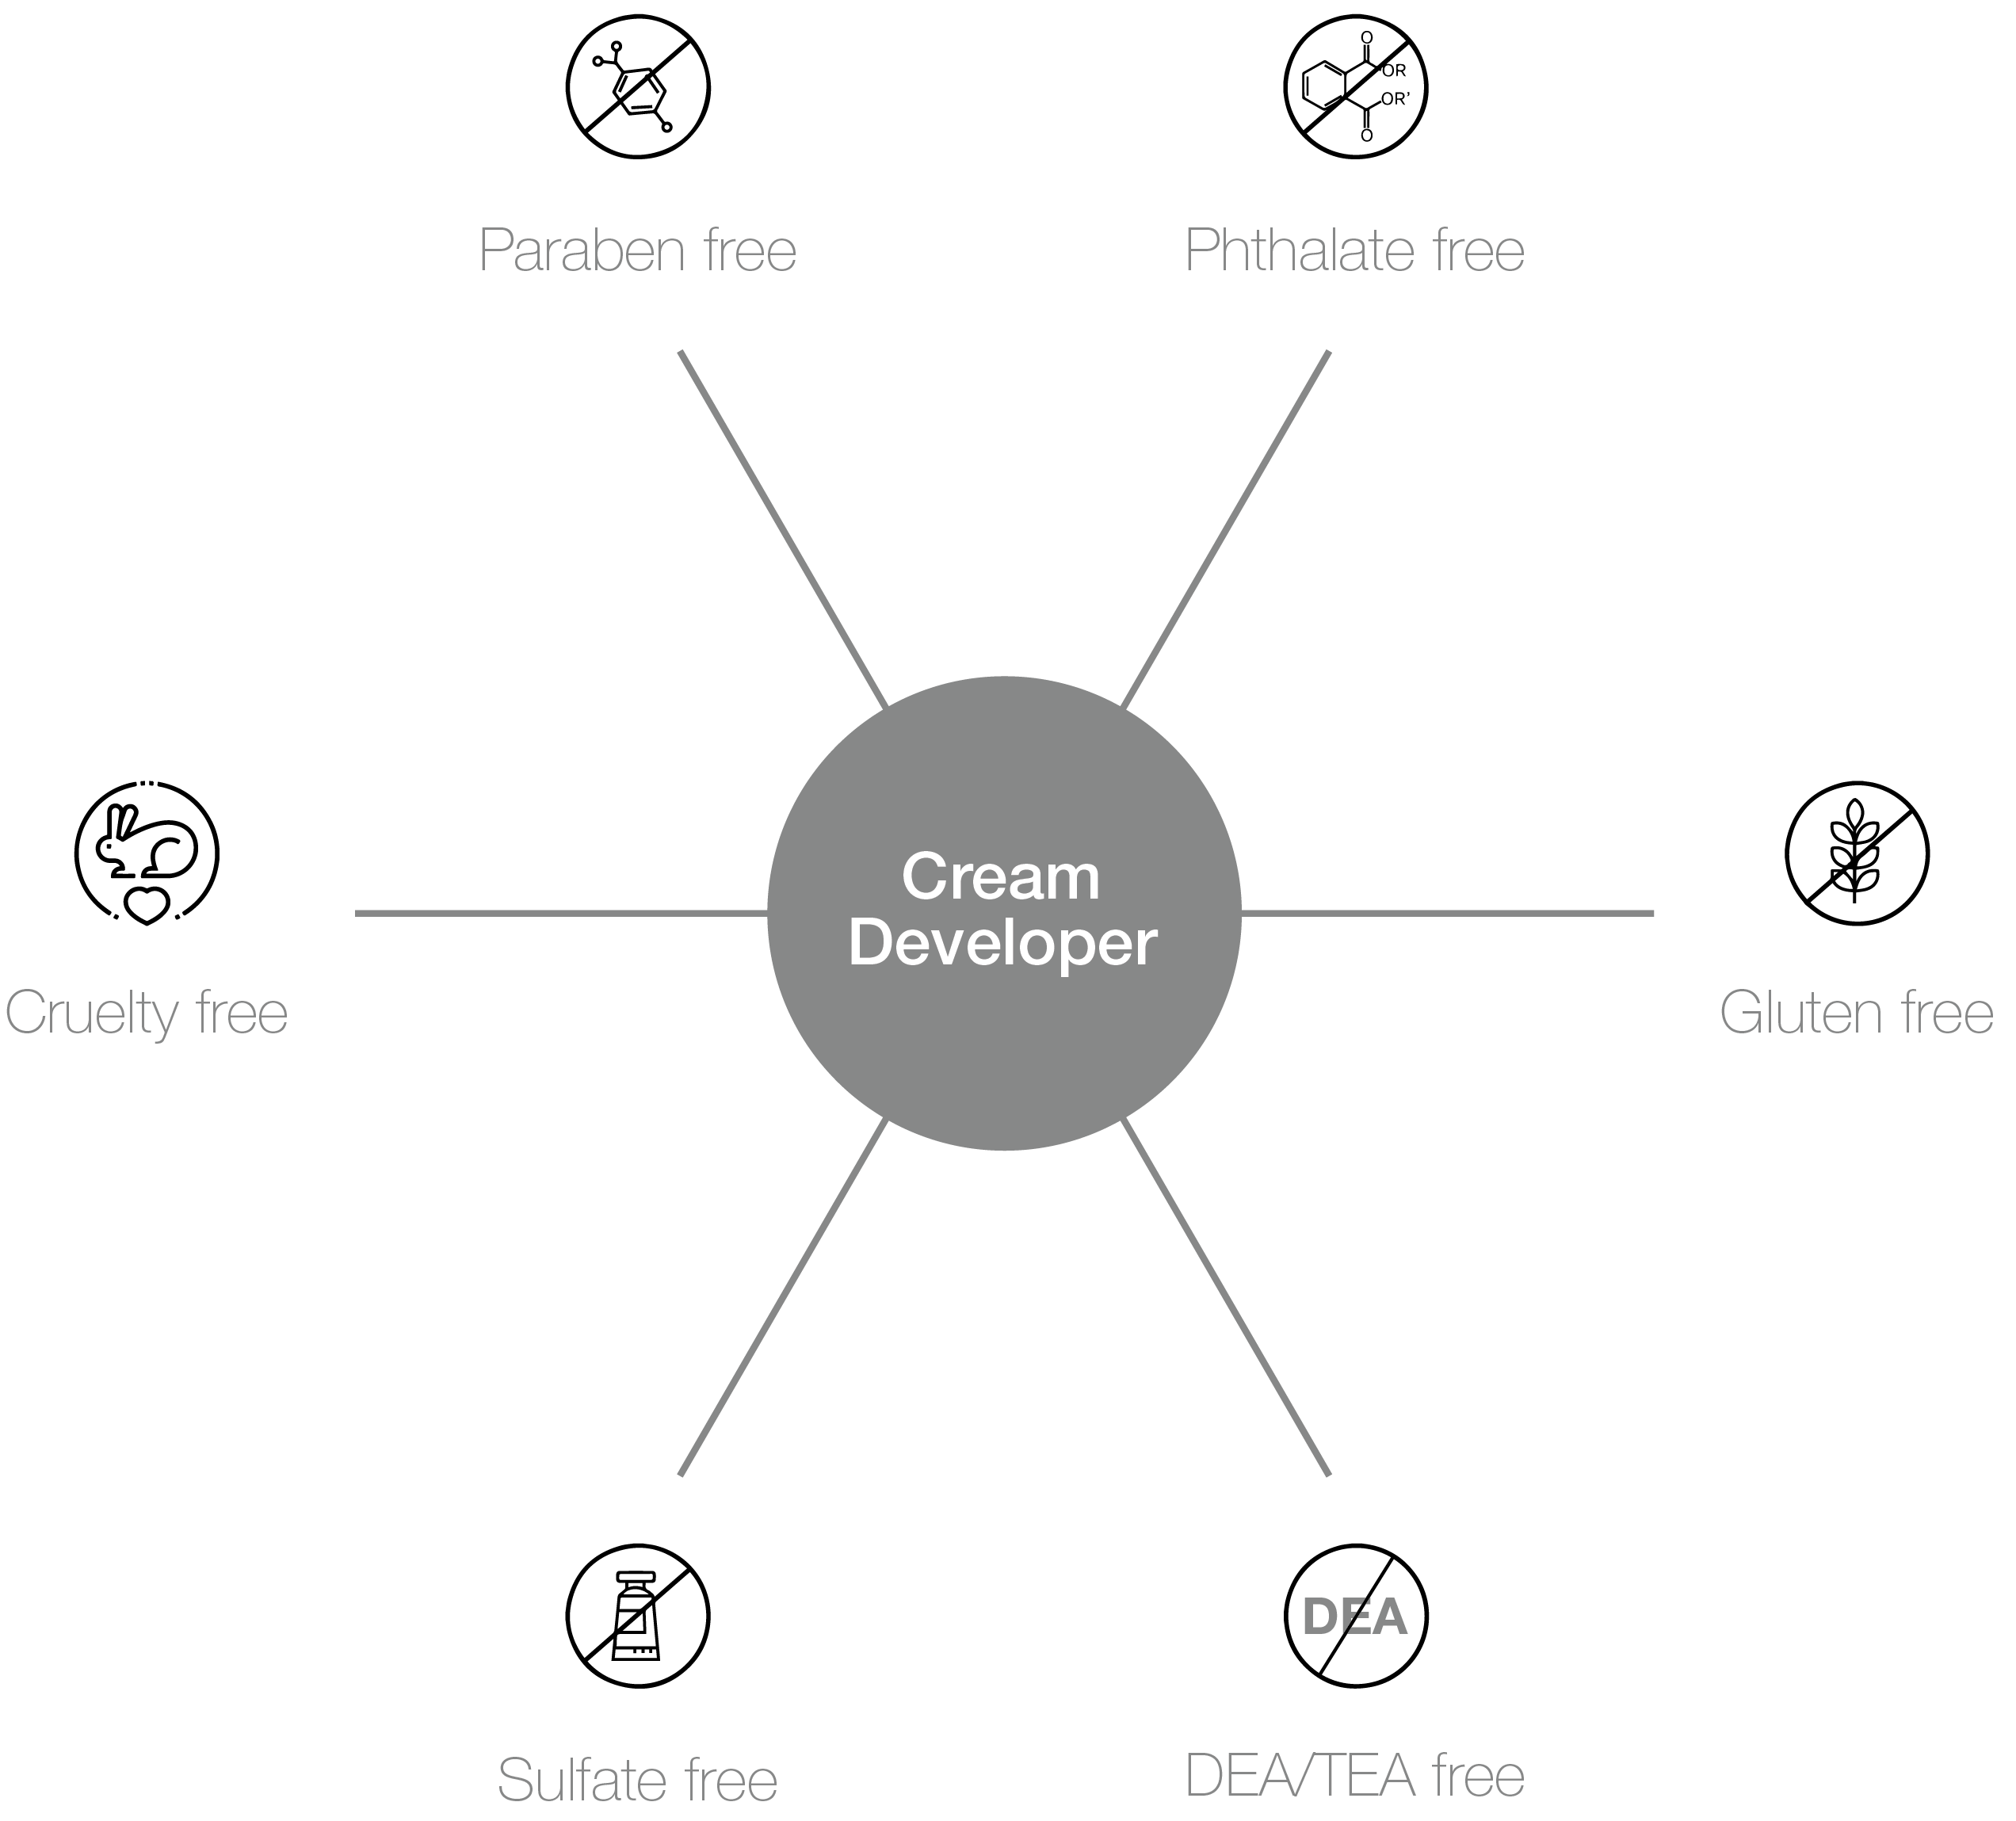 Cream Developer Pro-benefits